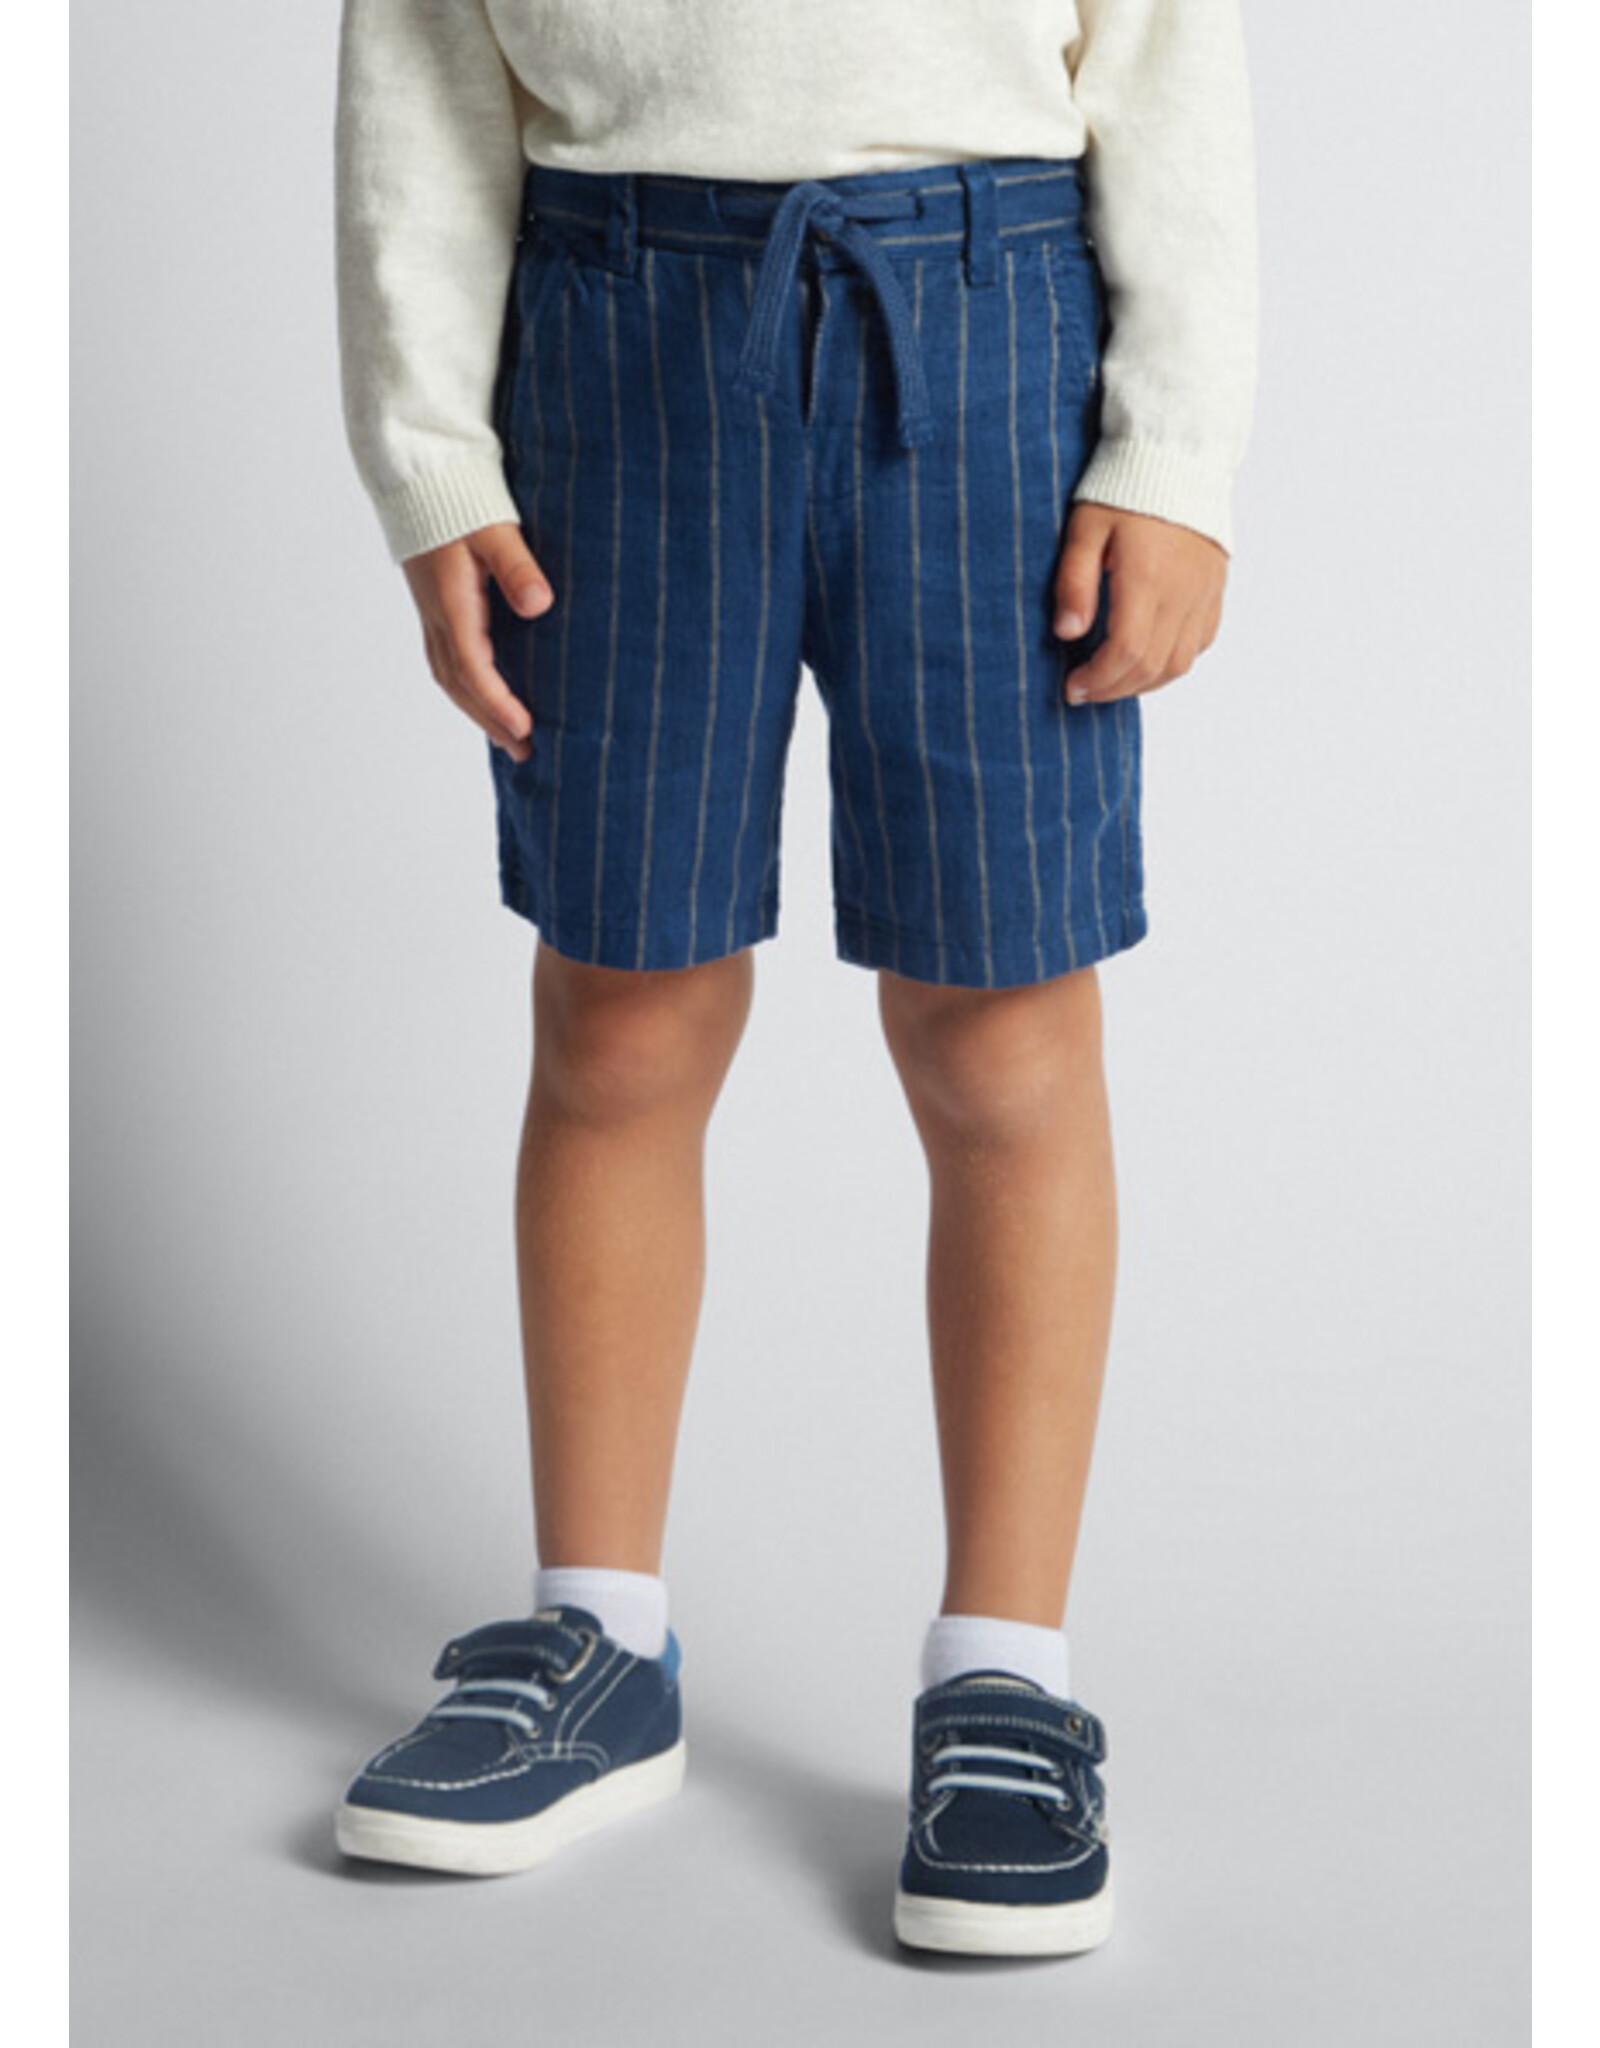 Mayoral Indigo Striped Linen Shorts